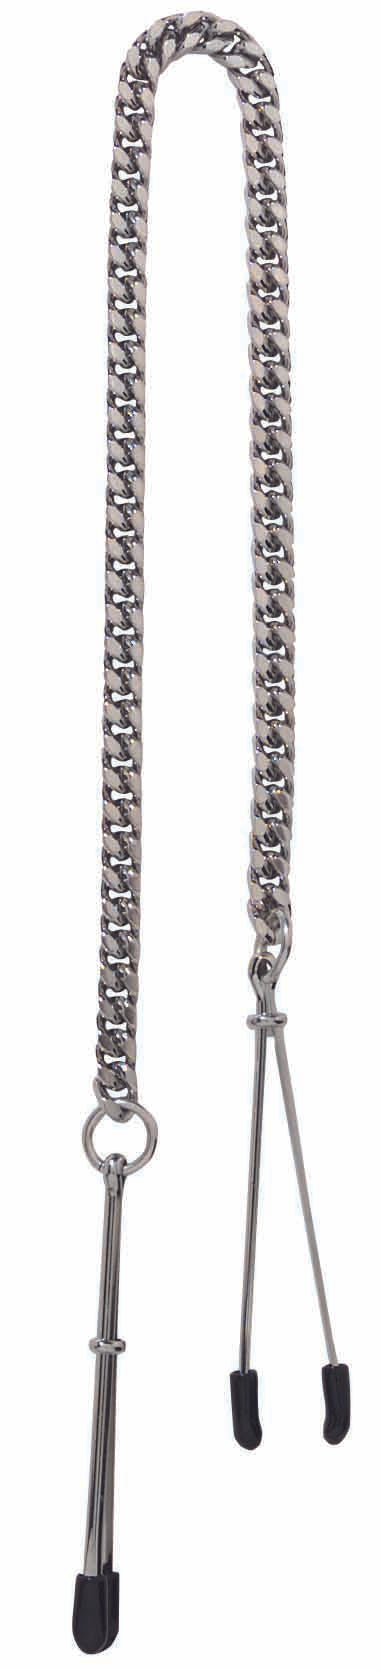 Adjustable Tweezer Nipple Clamps with Jewel Chain